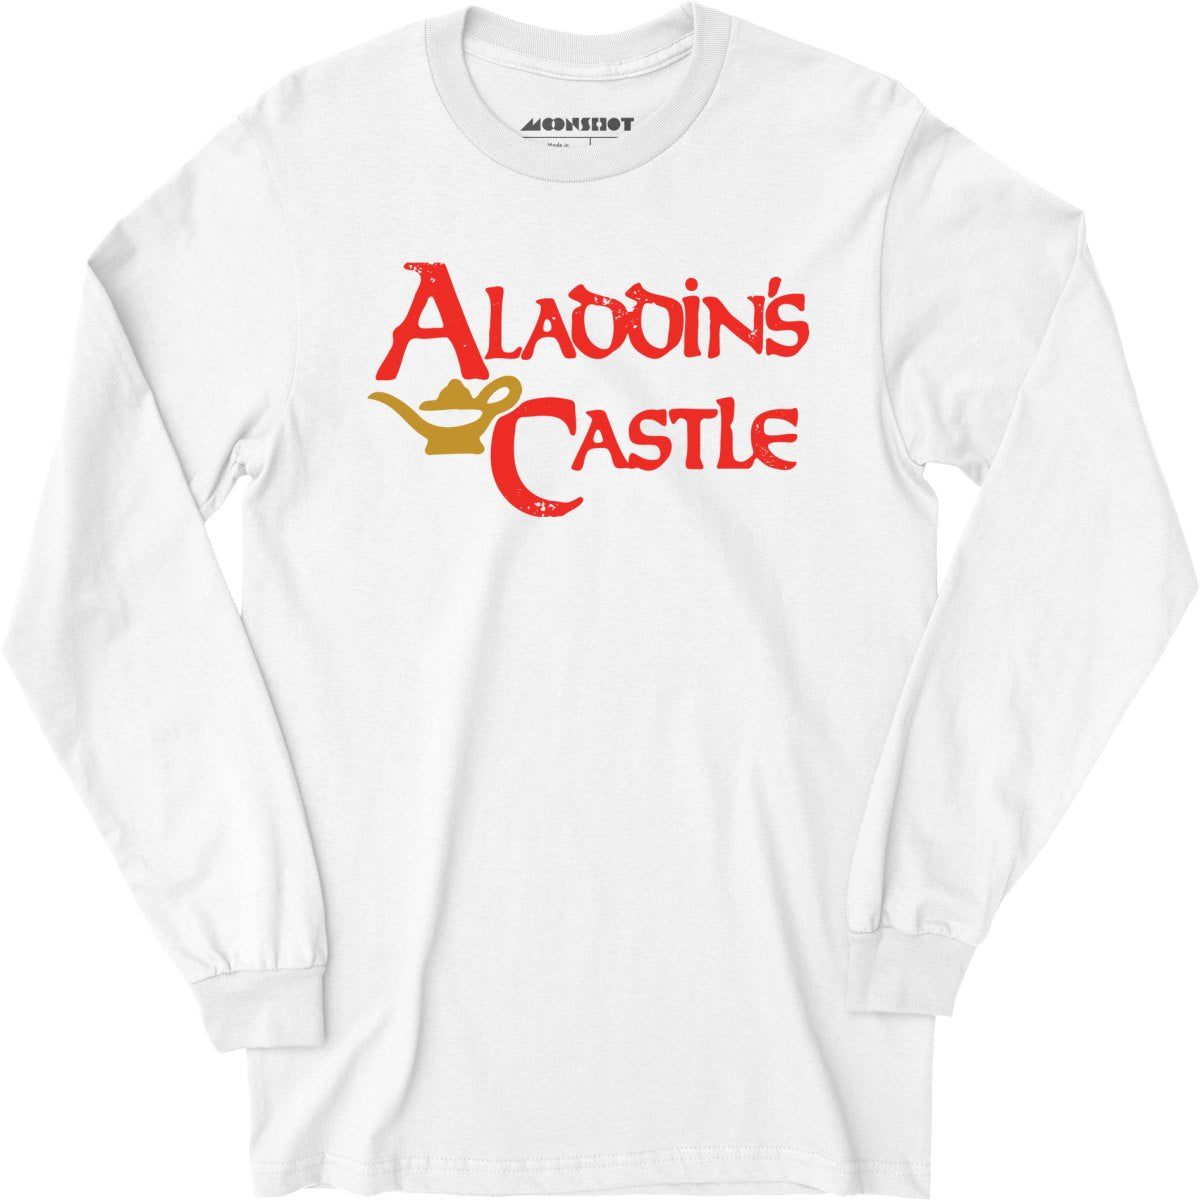 Aladdin's Castle - Long Sleeve T-Shirt